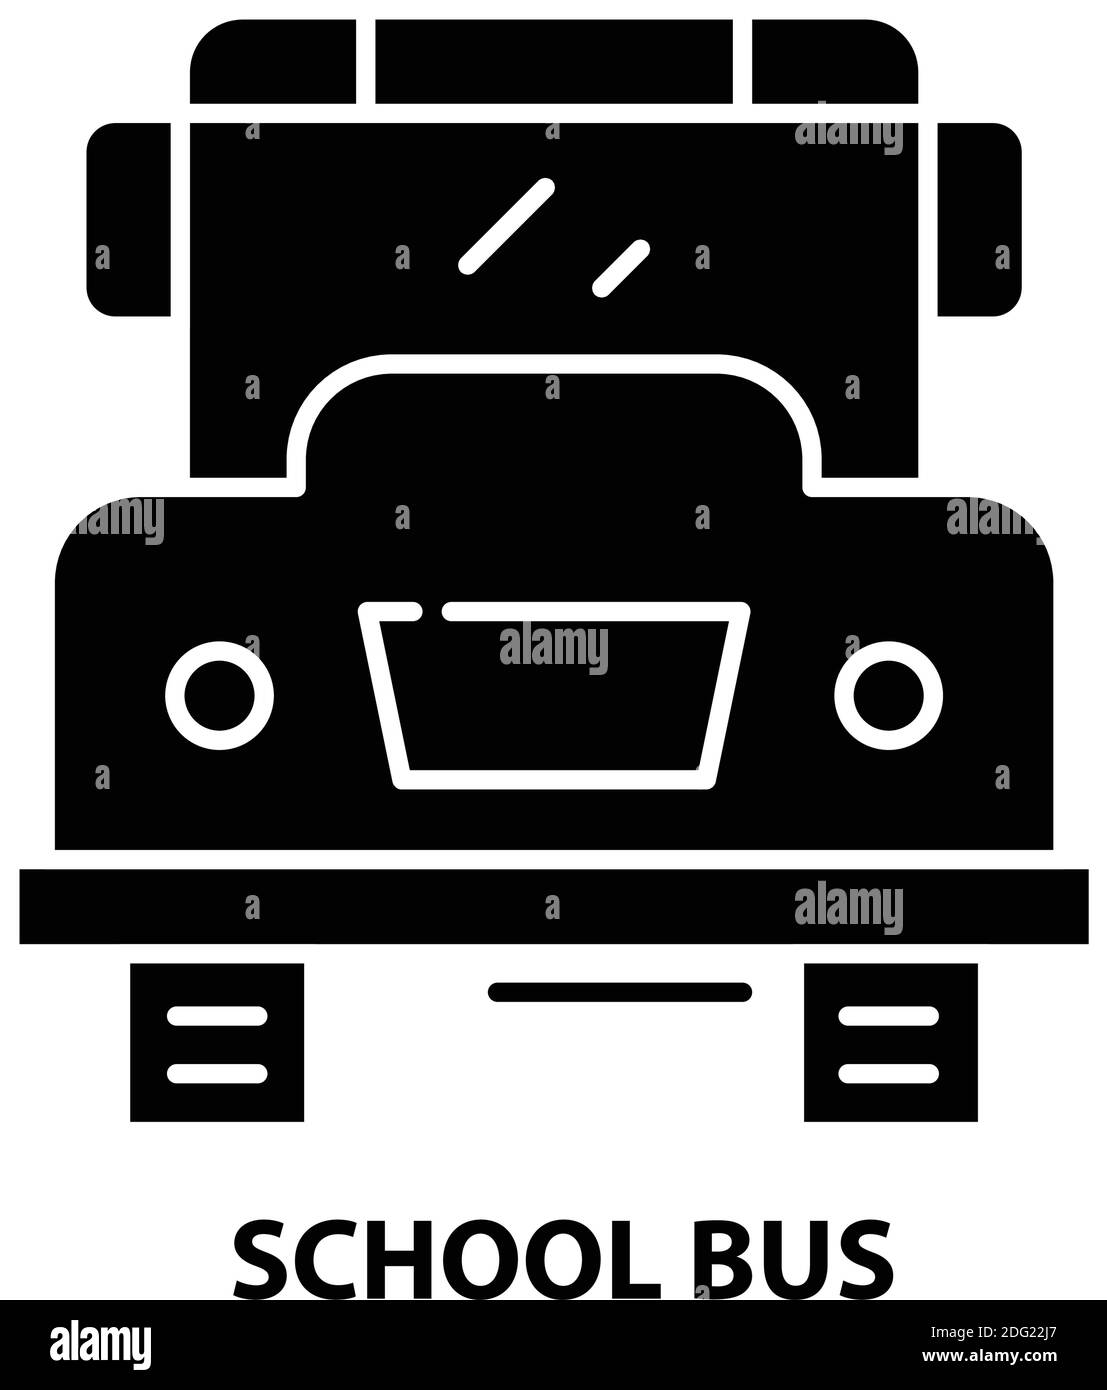 school bus icon, black vector sign with editable strokes, concept illustration Stock Vector